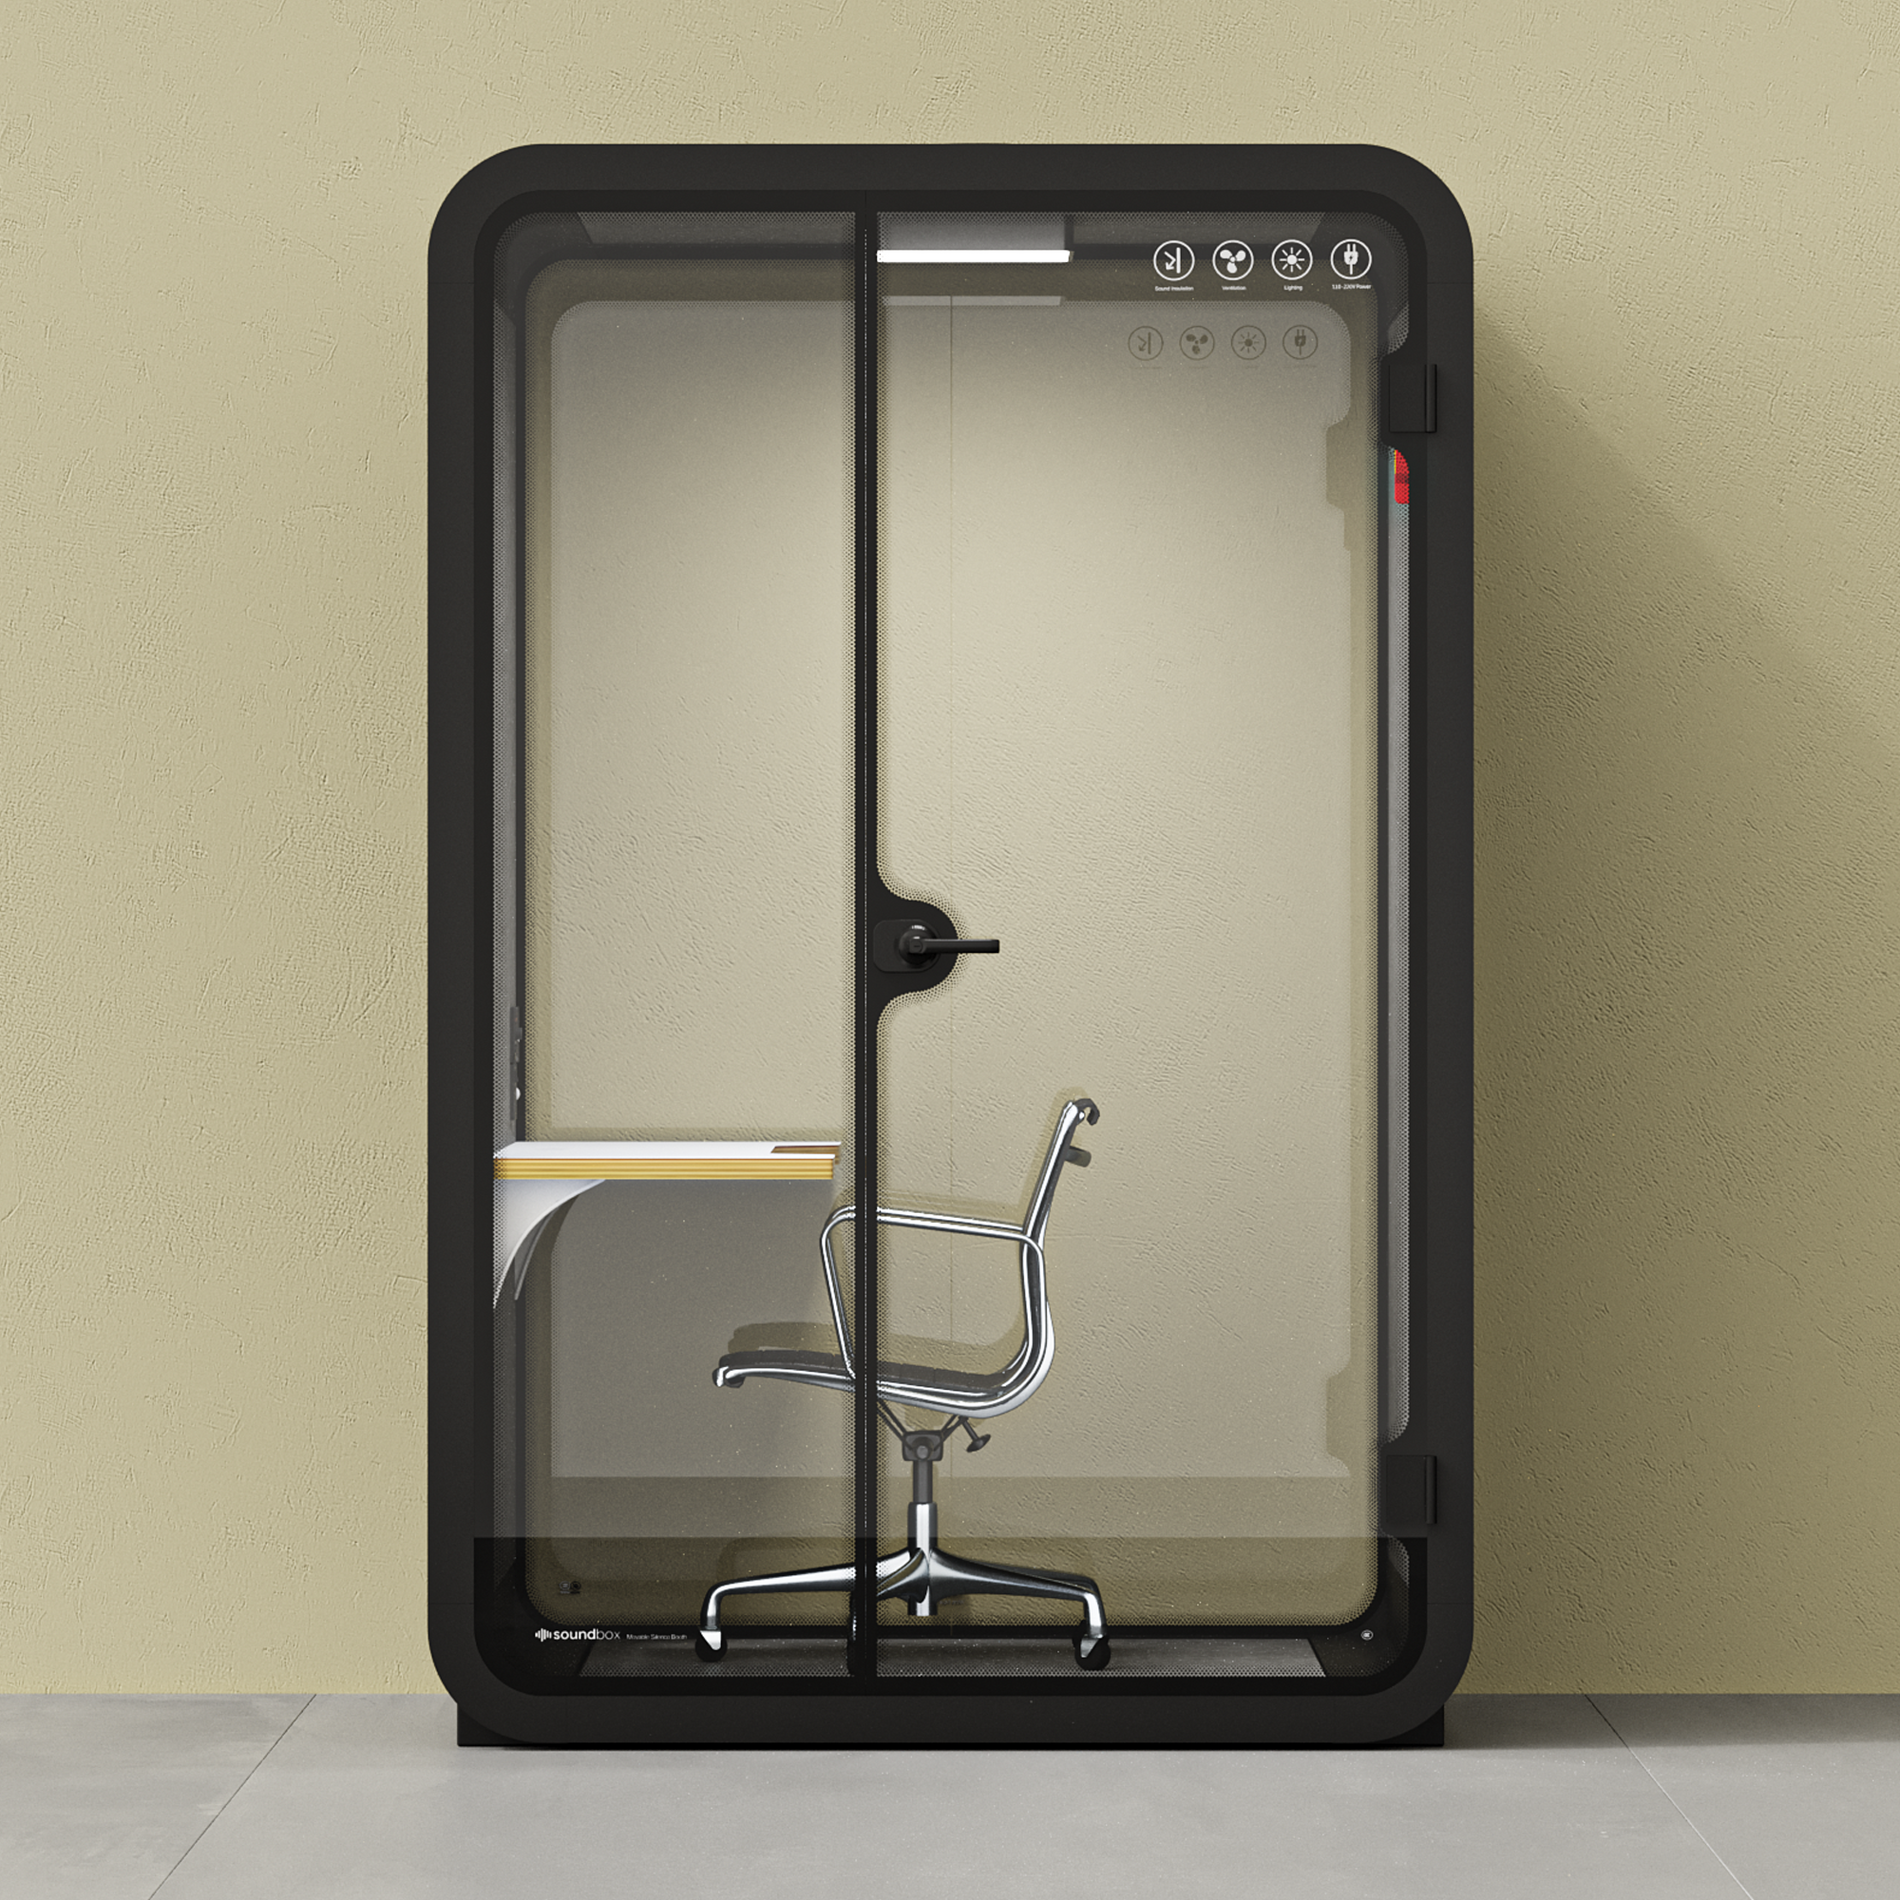 Quell Caseta de Oficina para Dos PersonasCharcoal / Dark Gray / Work Station + Designer Office Chair